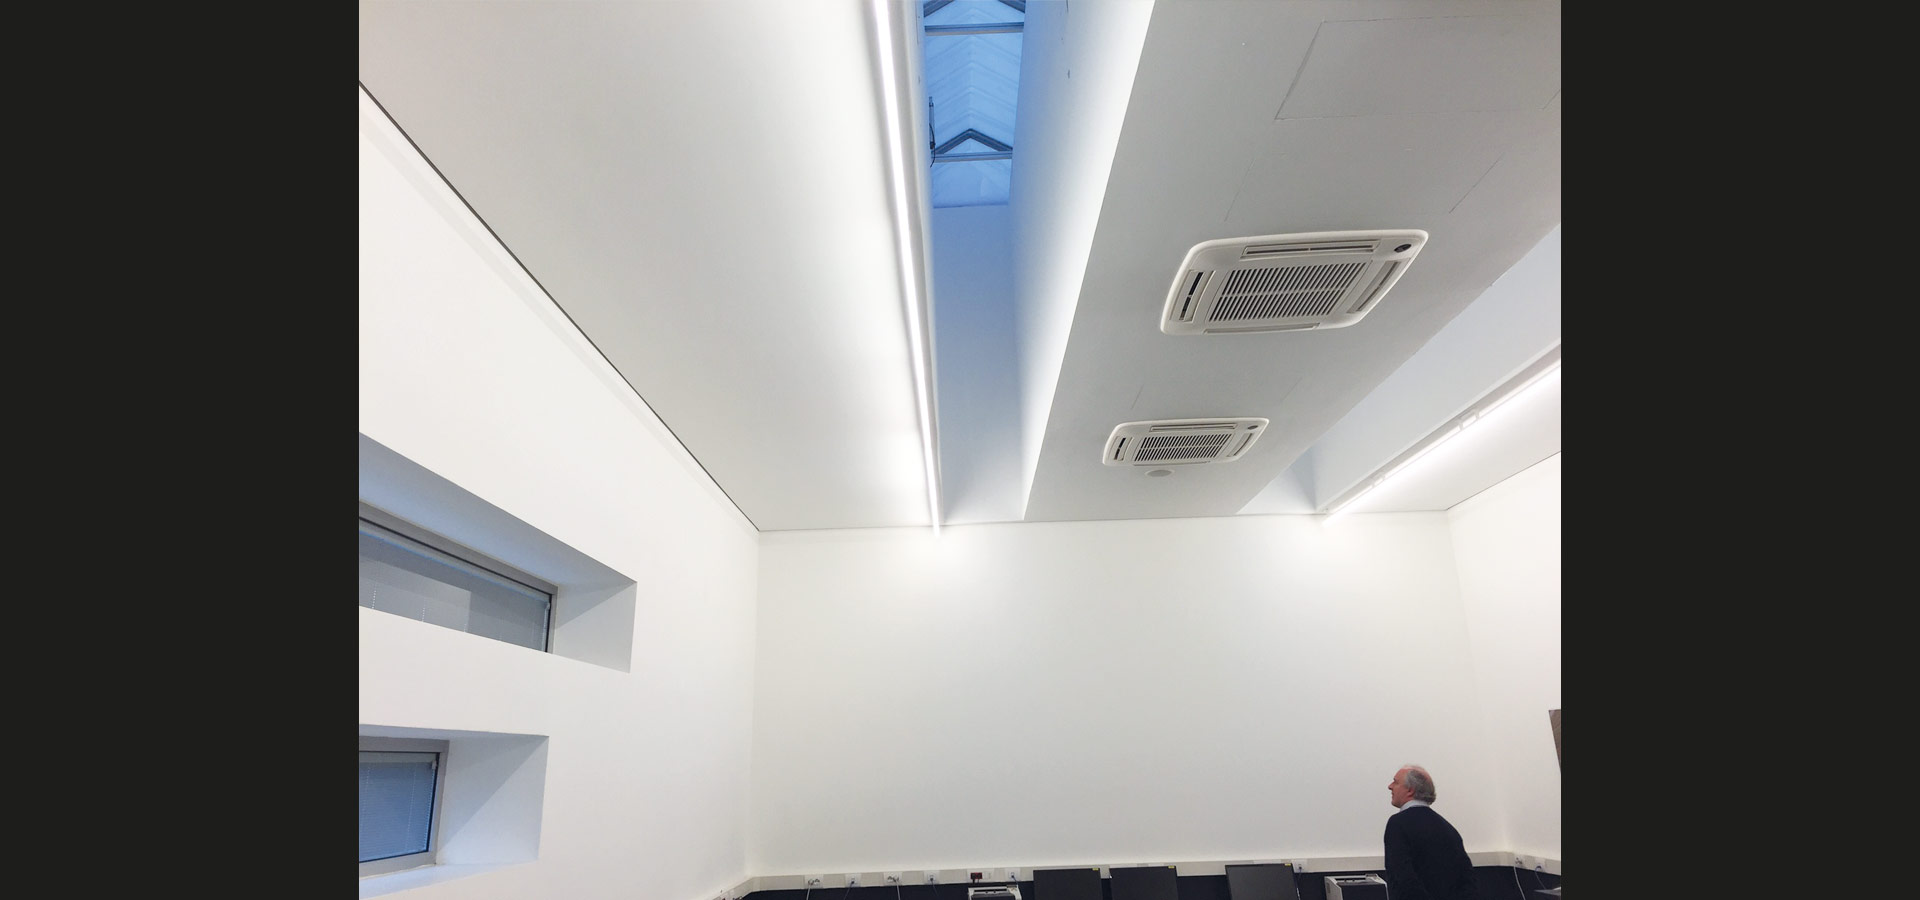 Luxsystem Vicenza office lighting optimal illumination SL 20.3